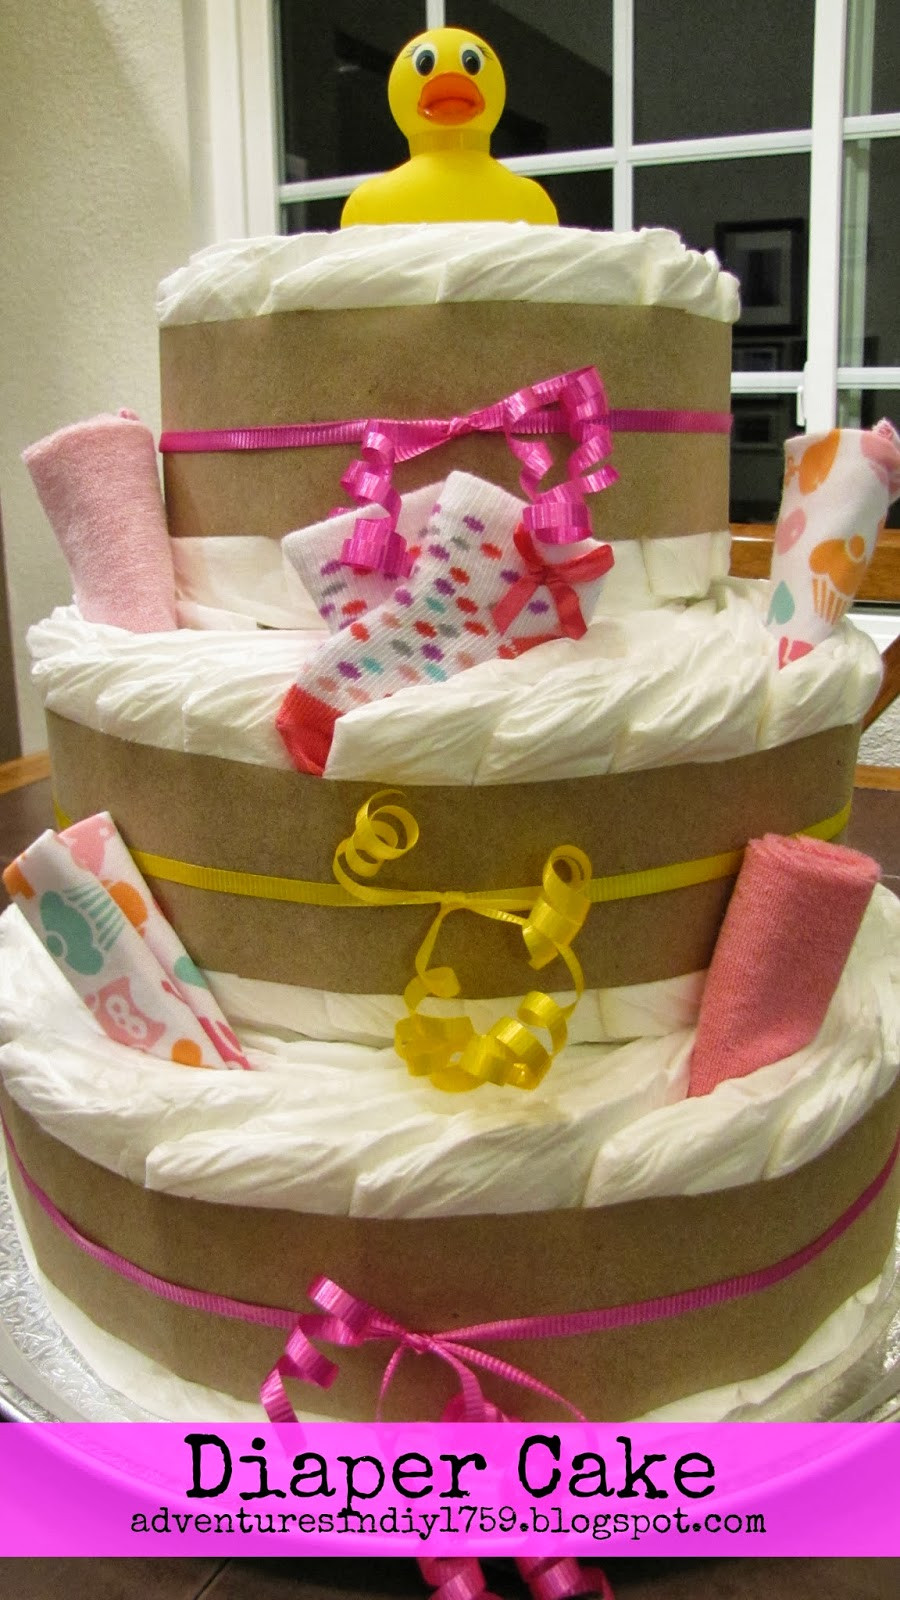 DIY Baby Diaper Cake
 Adventures in DIY Baby Shower Diaper Cake